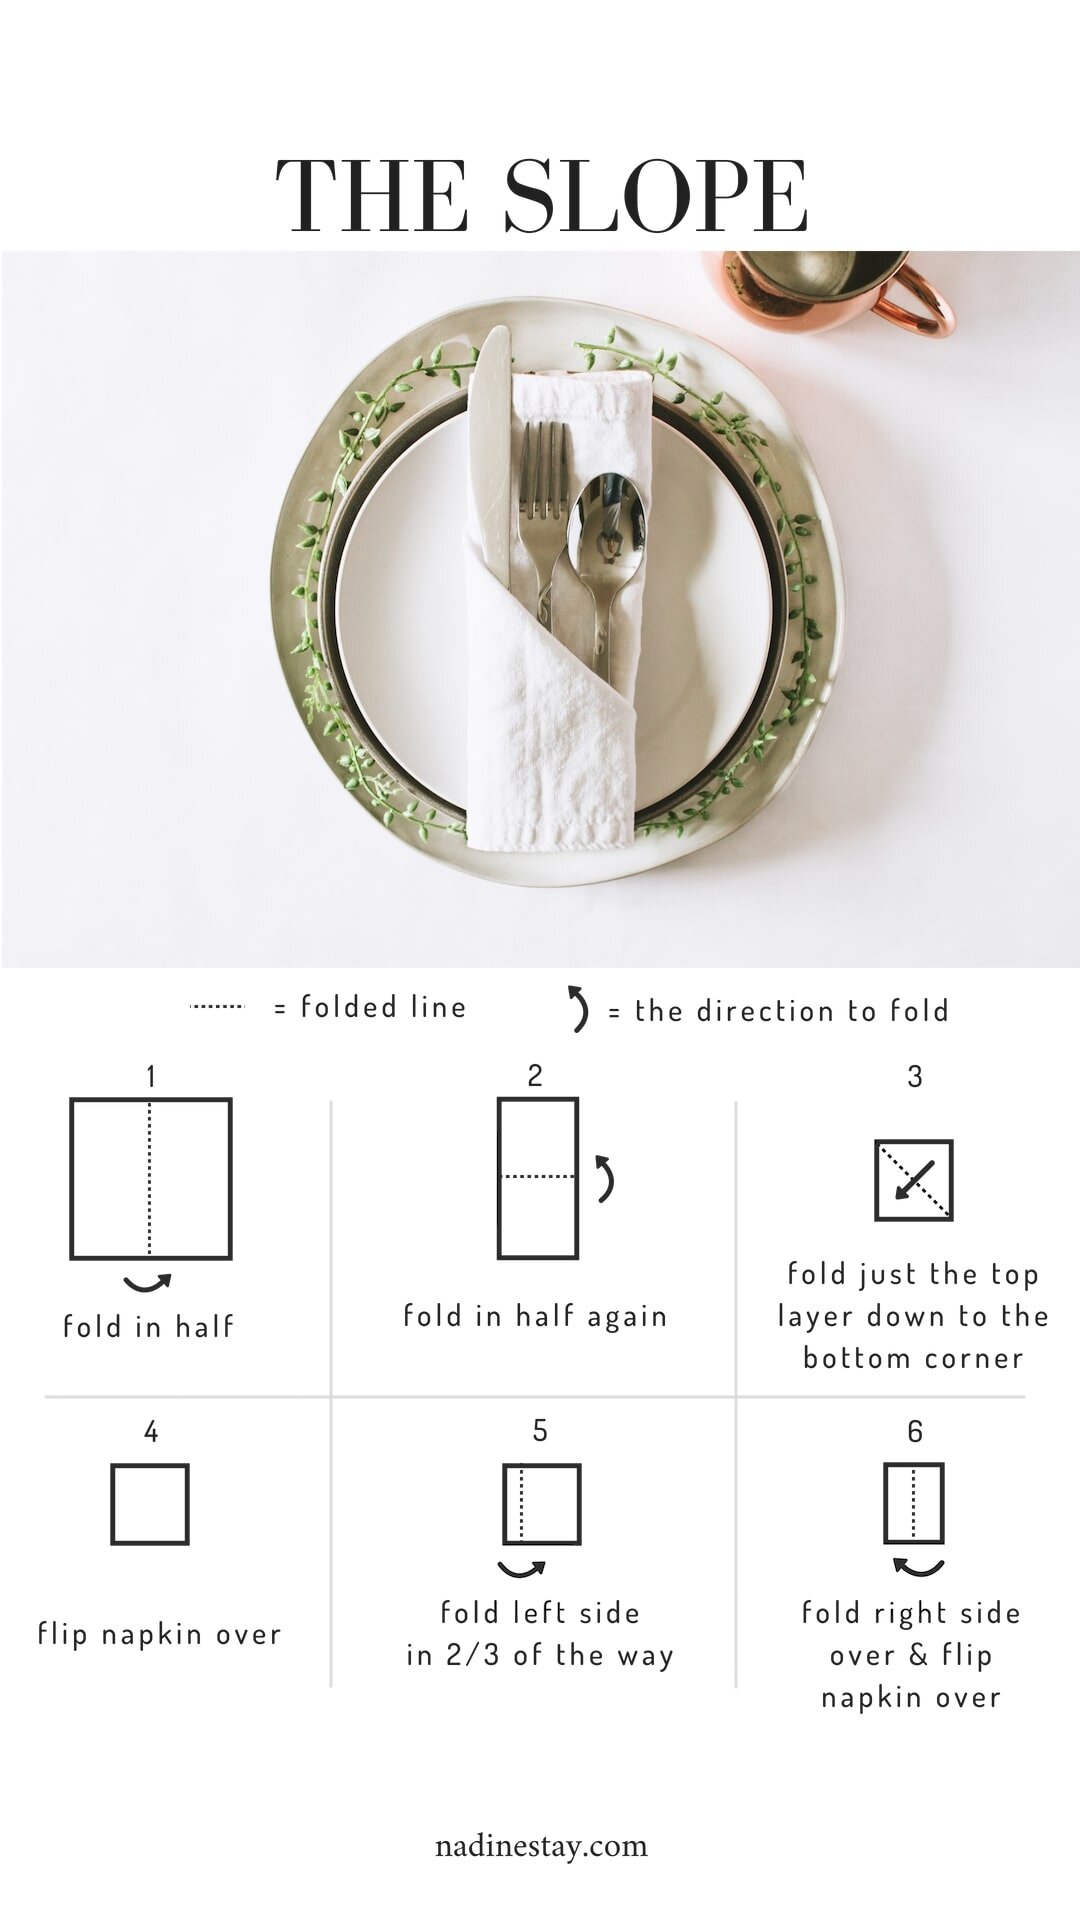 5 easy ways to fold a cloth napkin - place setting inspiration for weddings, birthdays, holidays, and events. Tablescape and table setting inspiration - The slope napkin fold